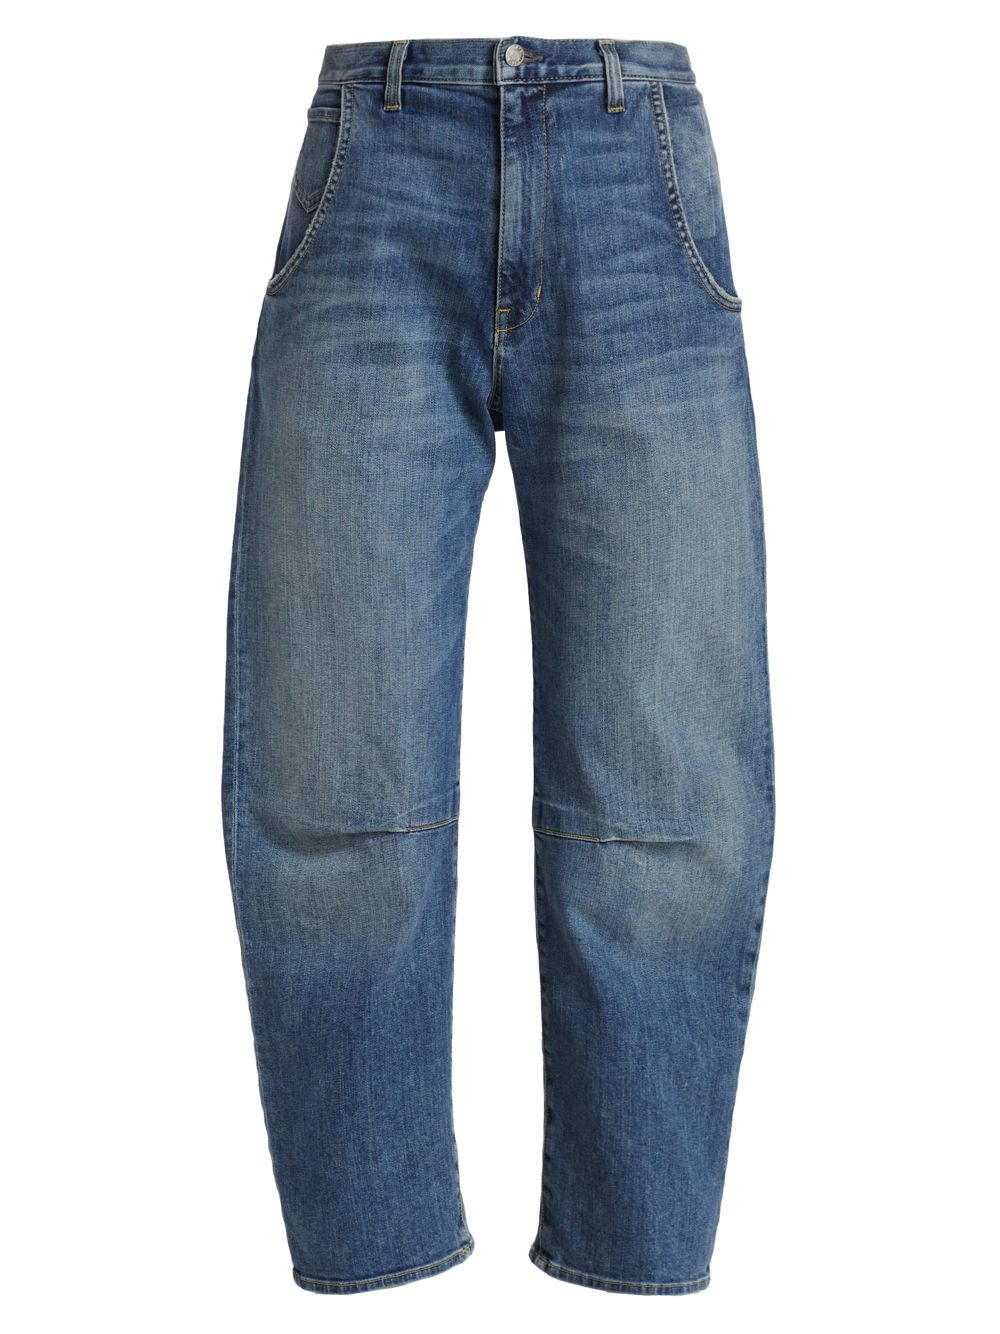 Широкие джинсы Emerson Nili Lotan джинсы широкого кроя emerson nili lotan синий